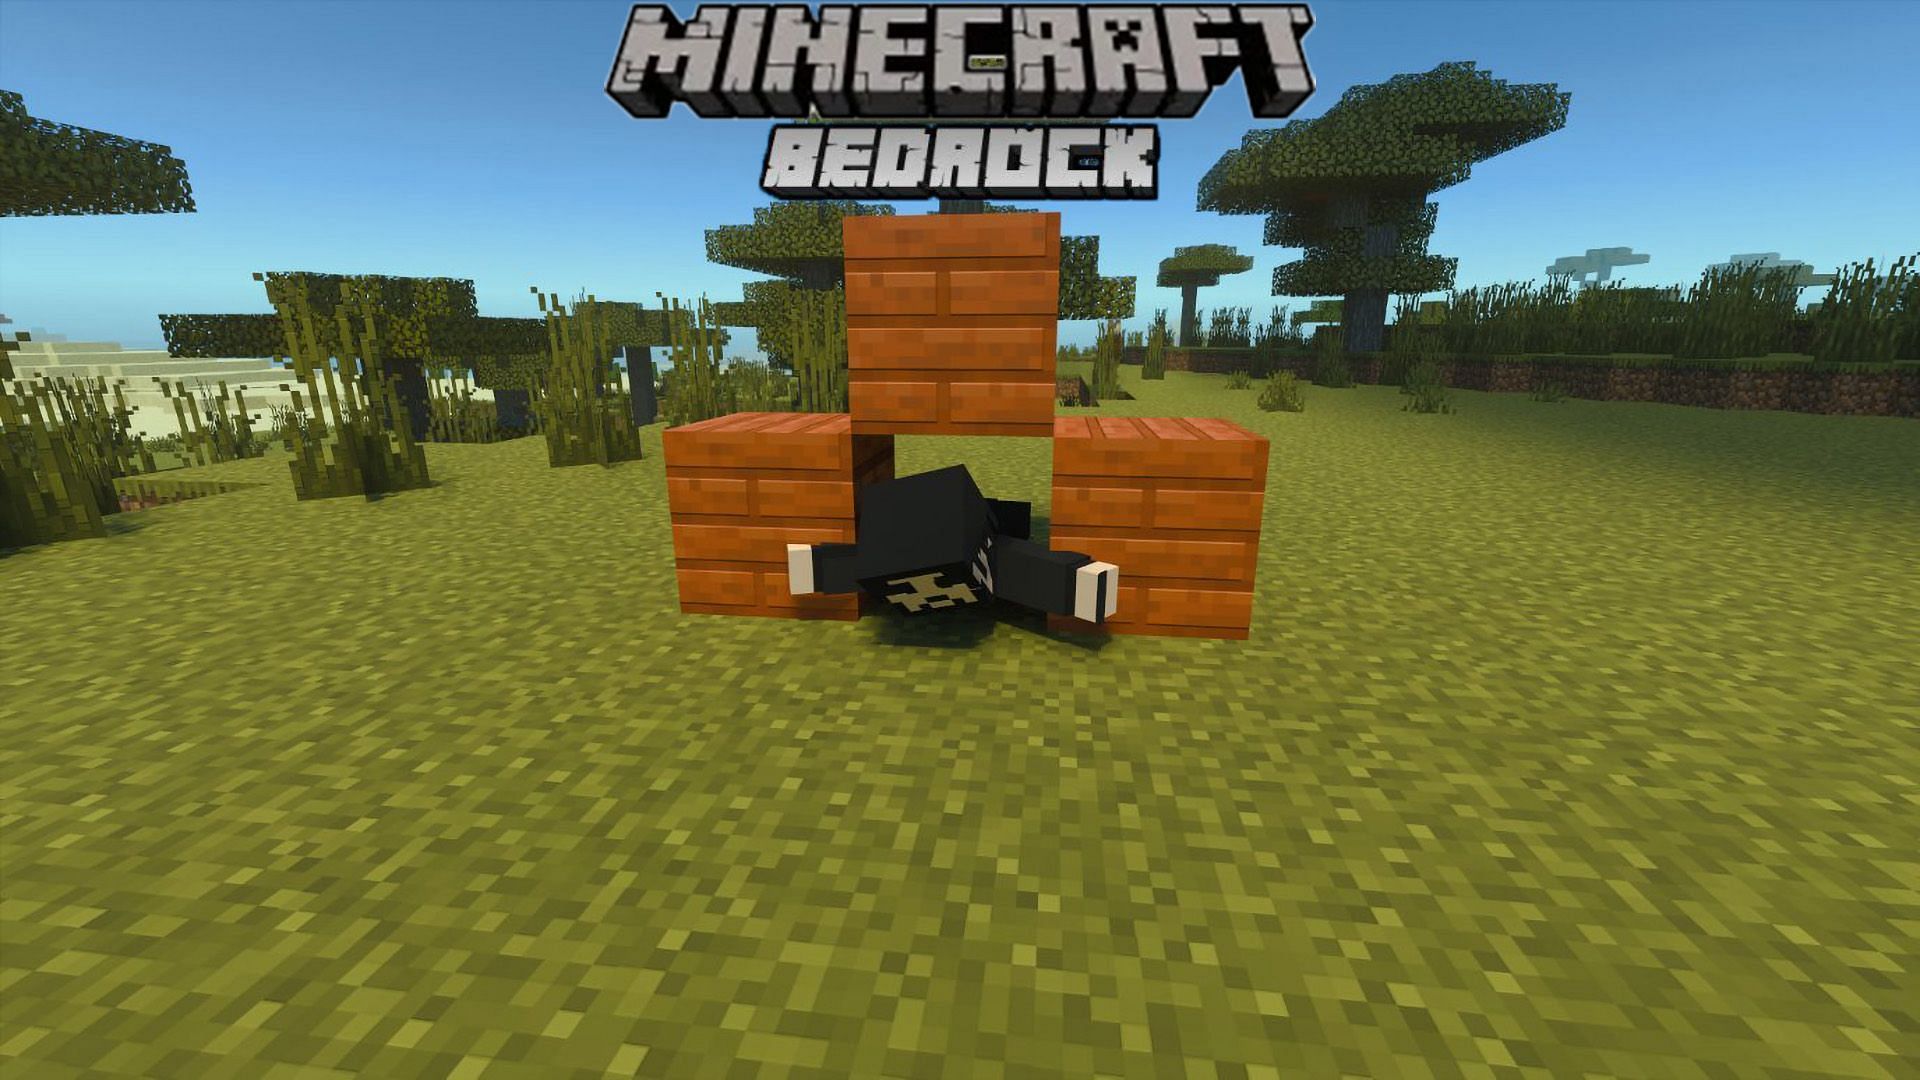 Introducing the new crawling mechanics in Minecraft Bedrock (Image via Mojang) 